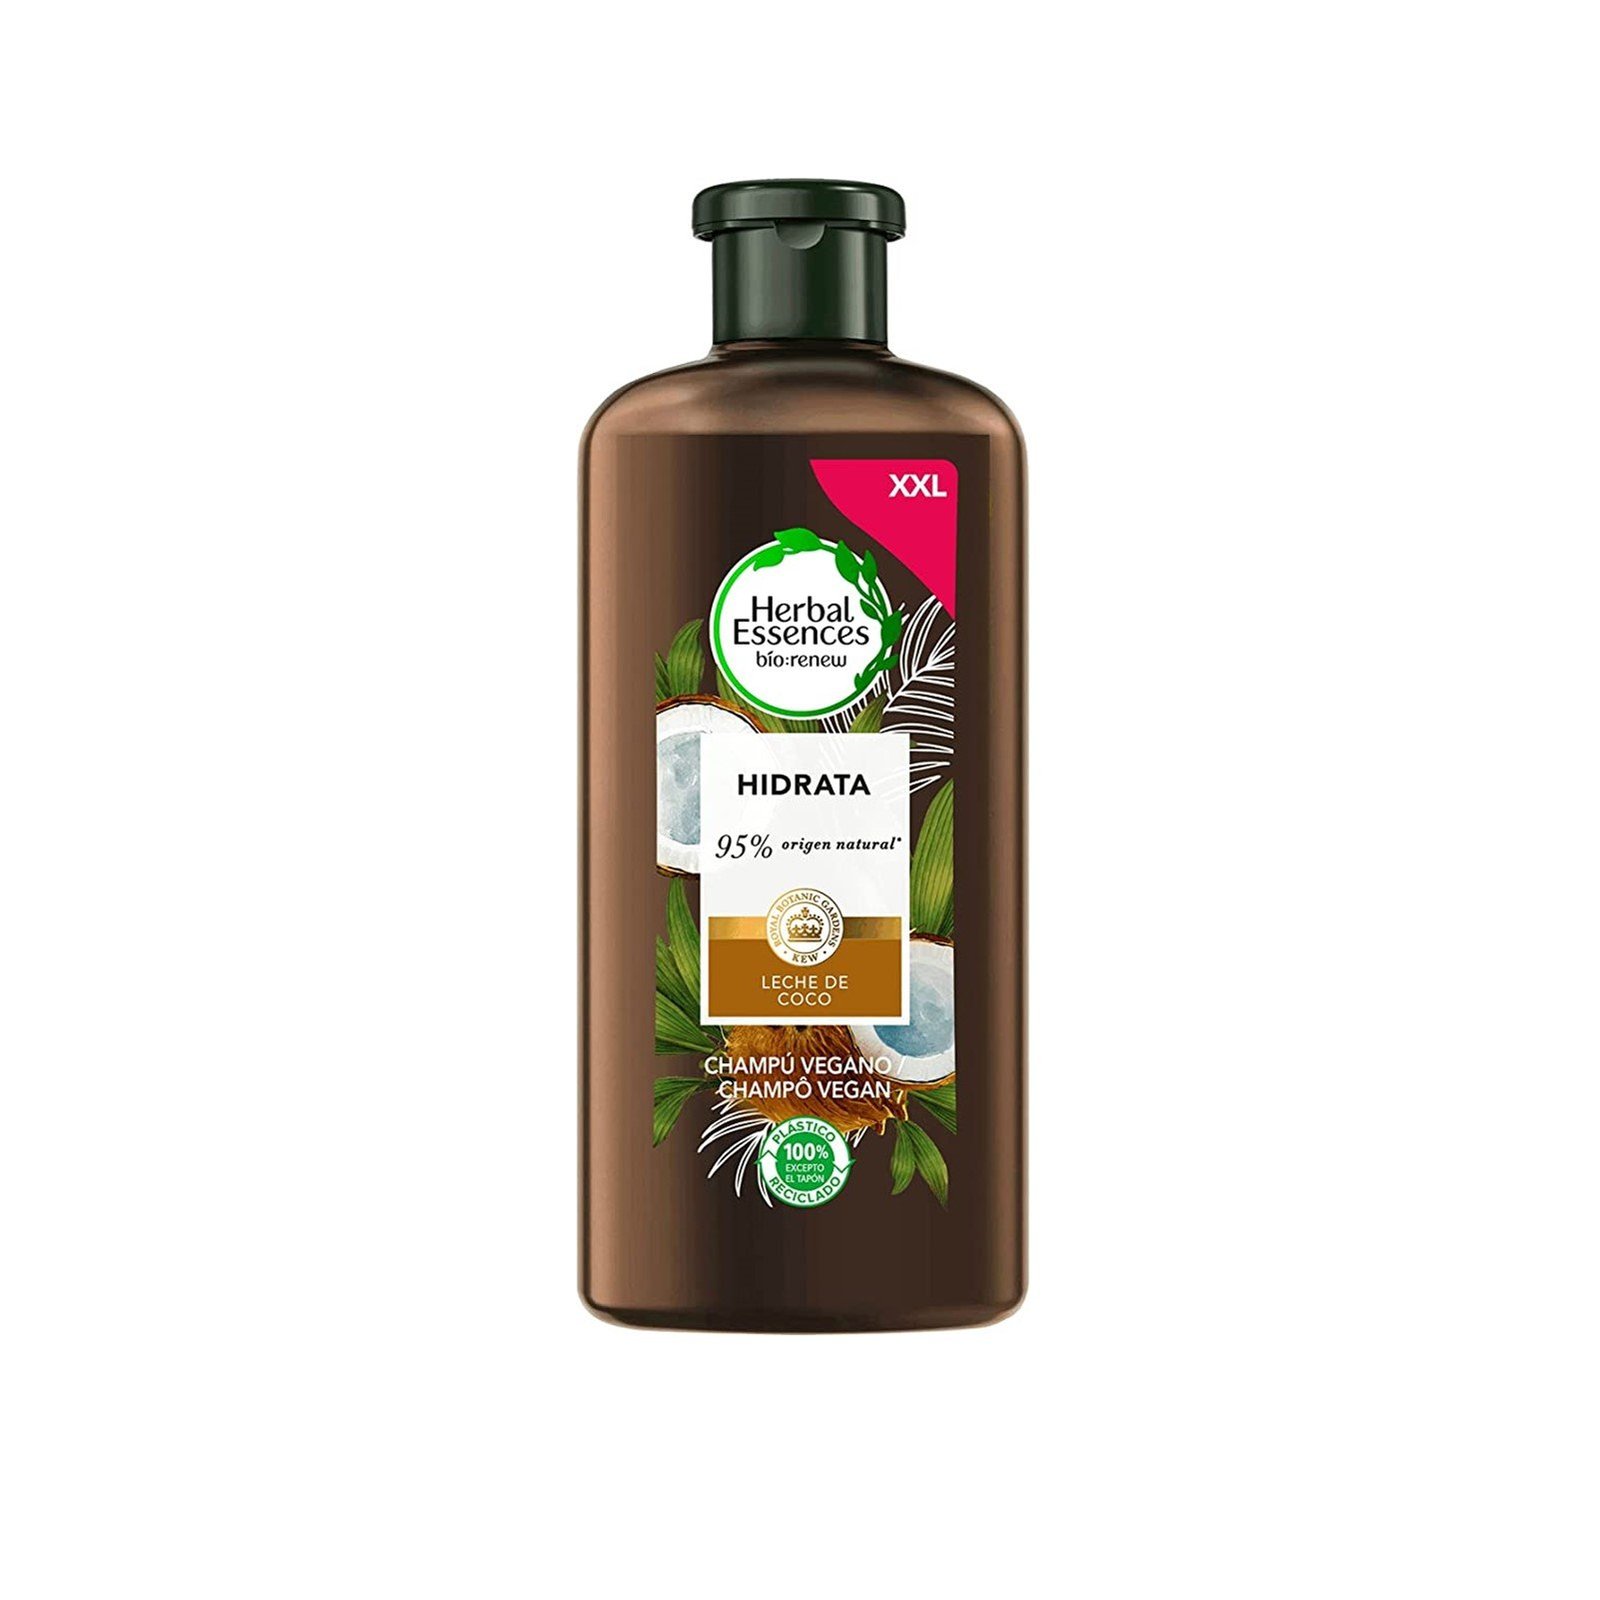 herbal essences szampon coconut